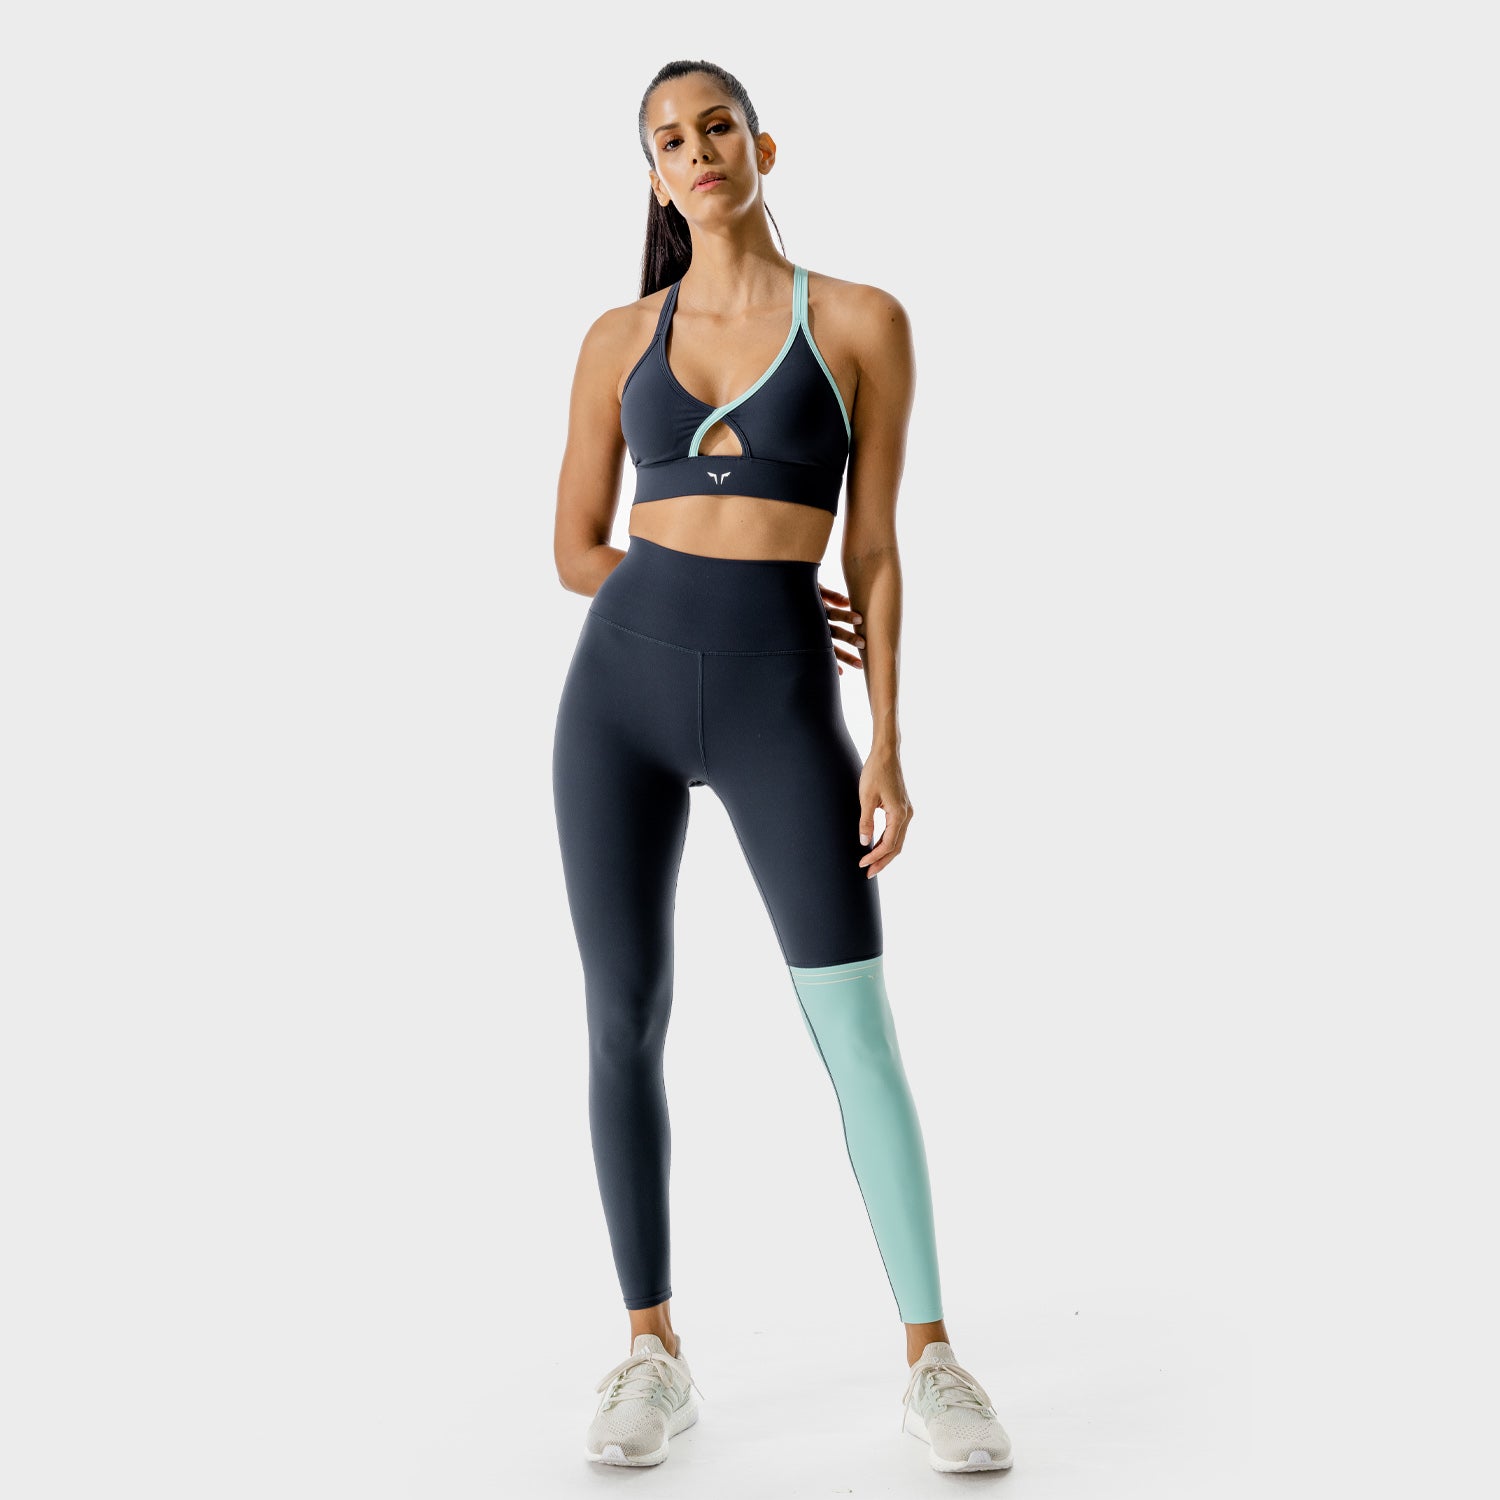 squatwolf-workout-clothes-lab-360-wrap-bra-blue-sports-bra-for-gym